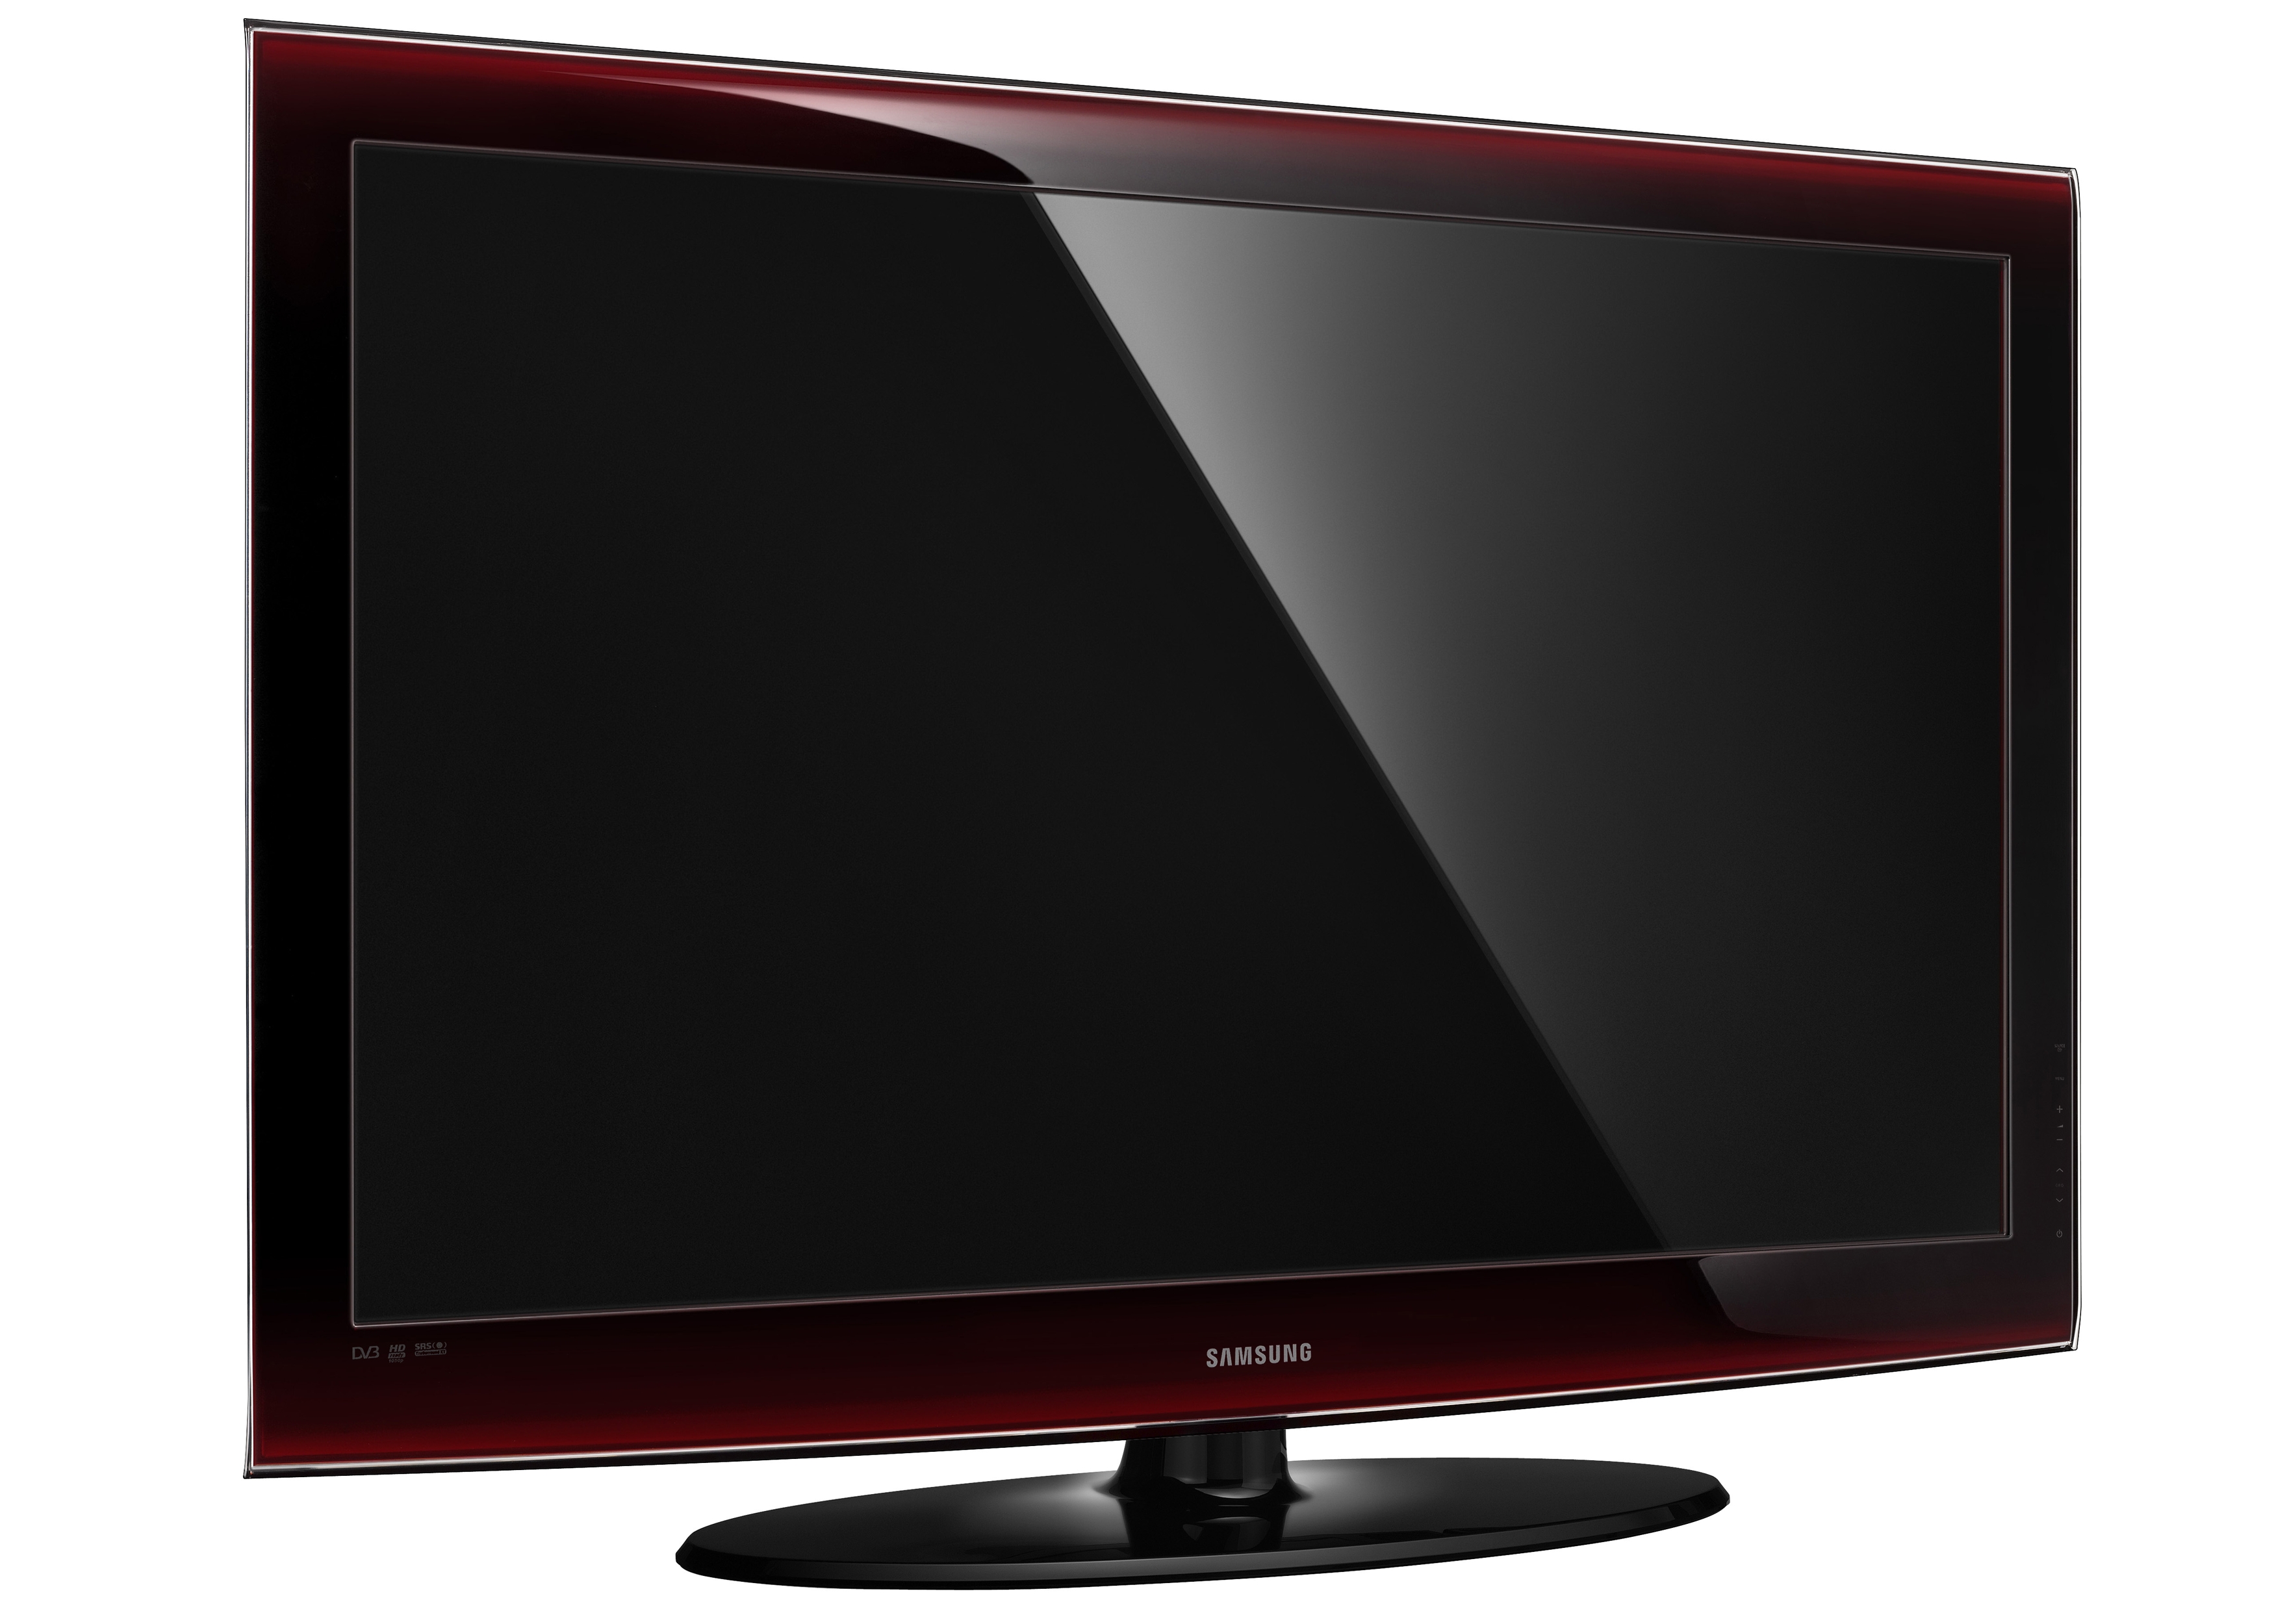 Should You Use an LCD TV as an External Laptop Screen? - Dom's Tech